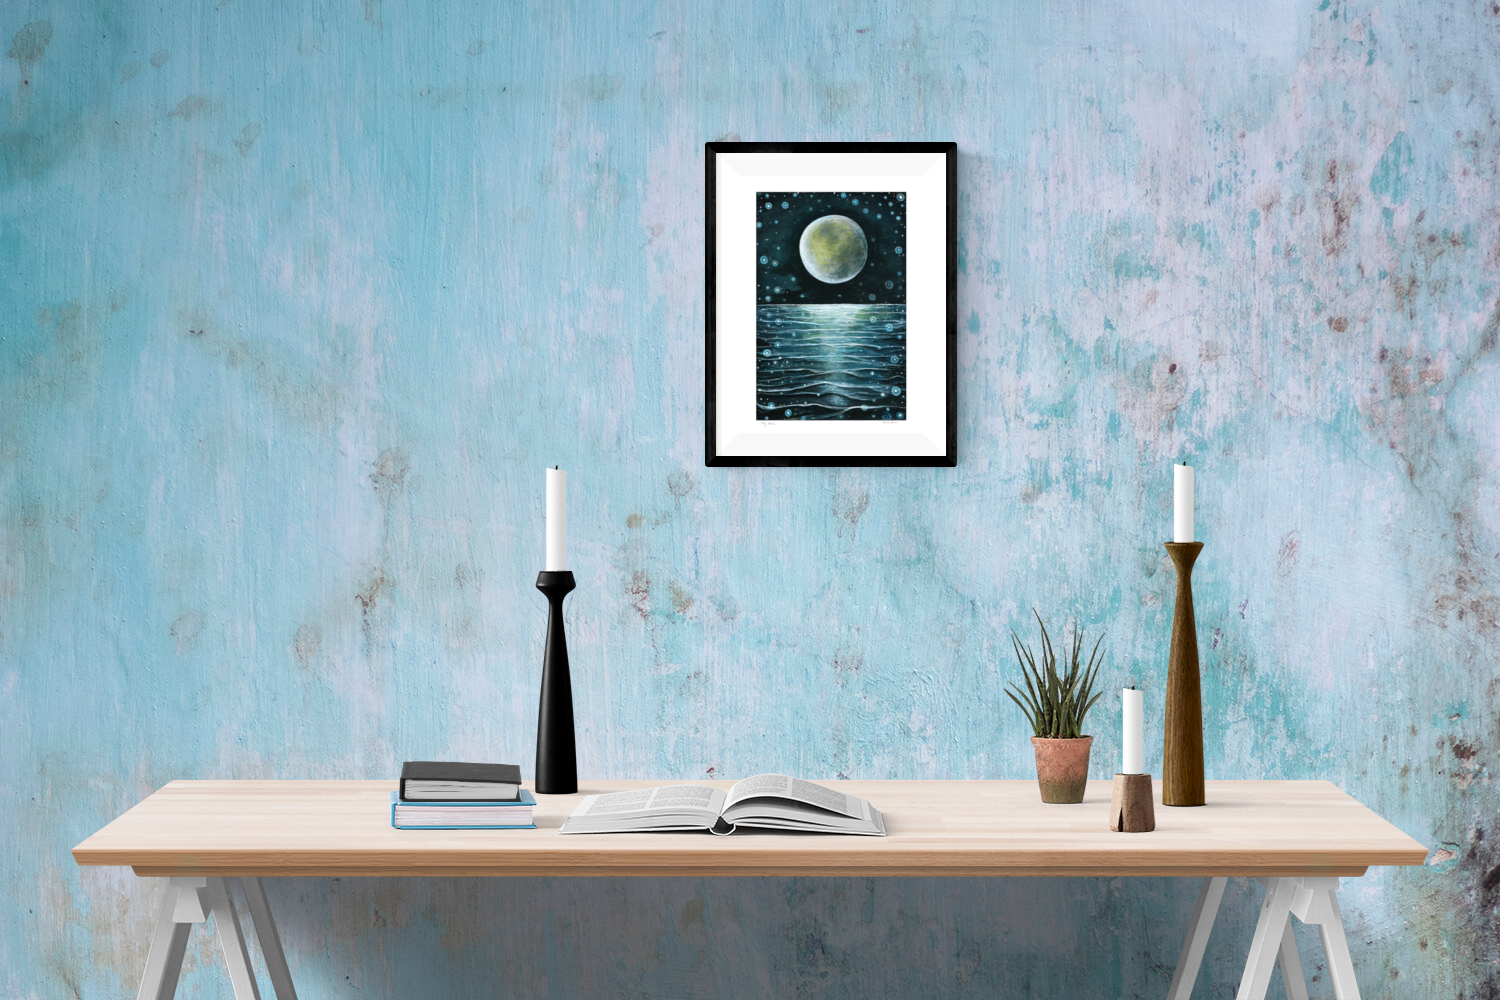 My Moon ~ Art Print